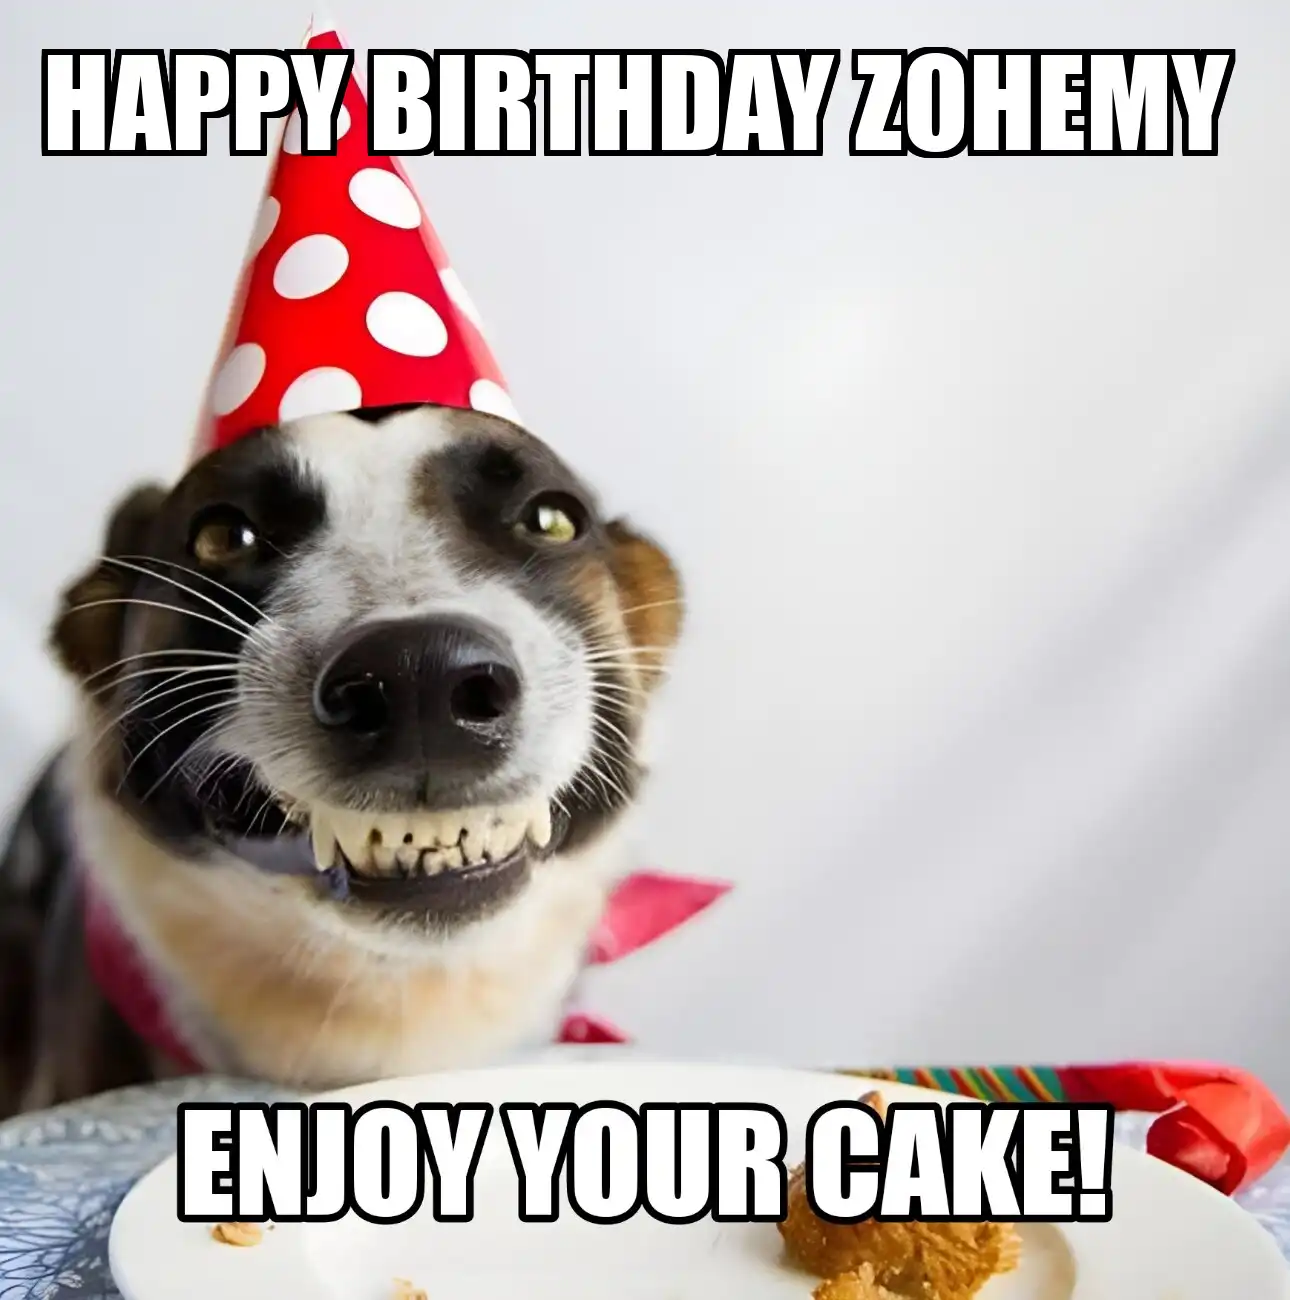 Happy Birthday Zohemy Enjoy Your Cake Dog Meme